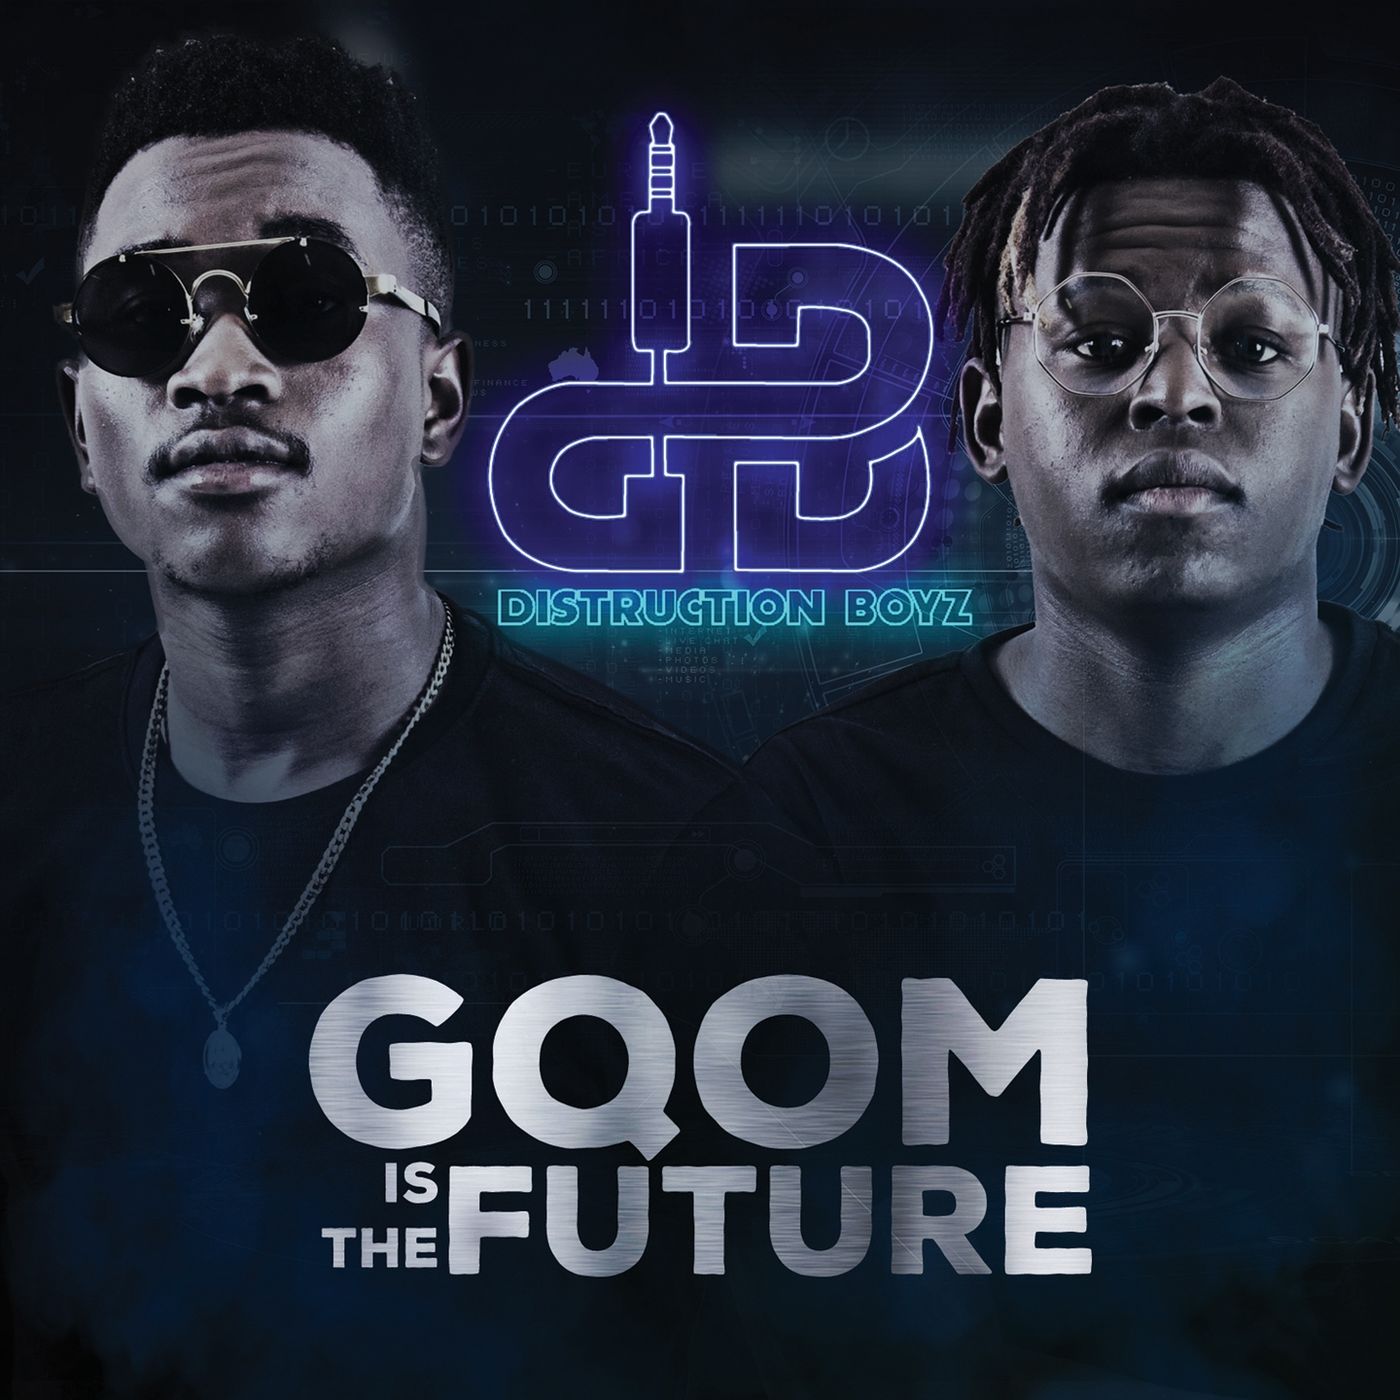 Distruction Boyz - Gqom Is the Future / Distruction Boyz Records